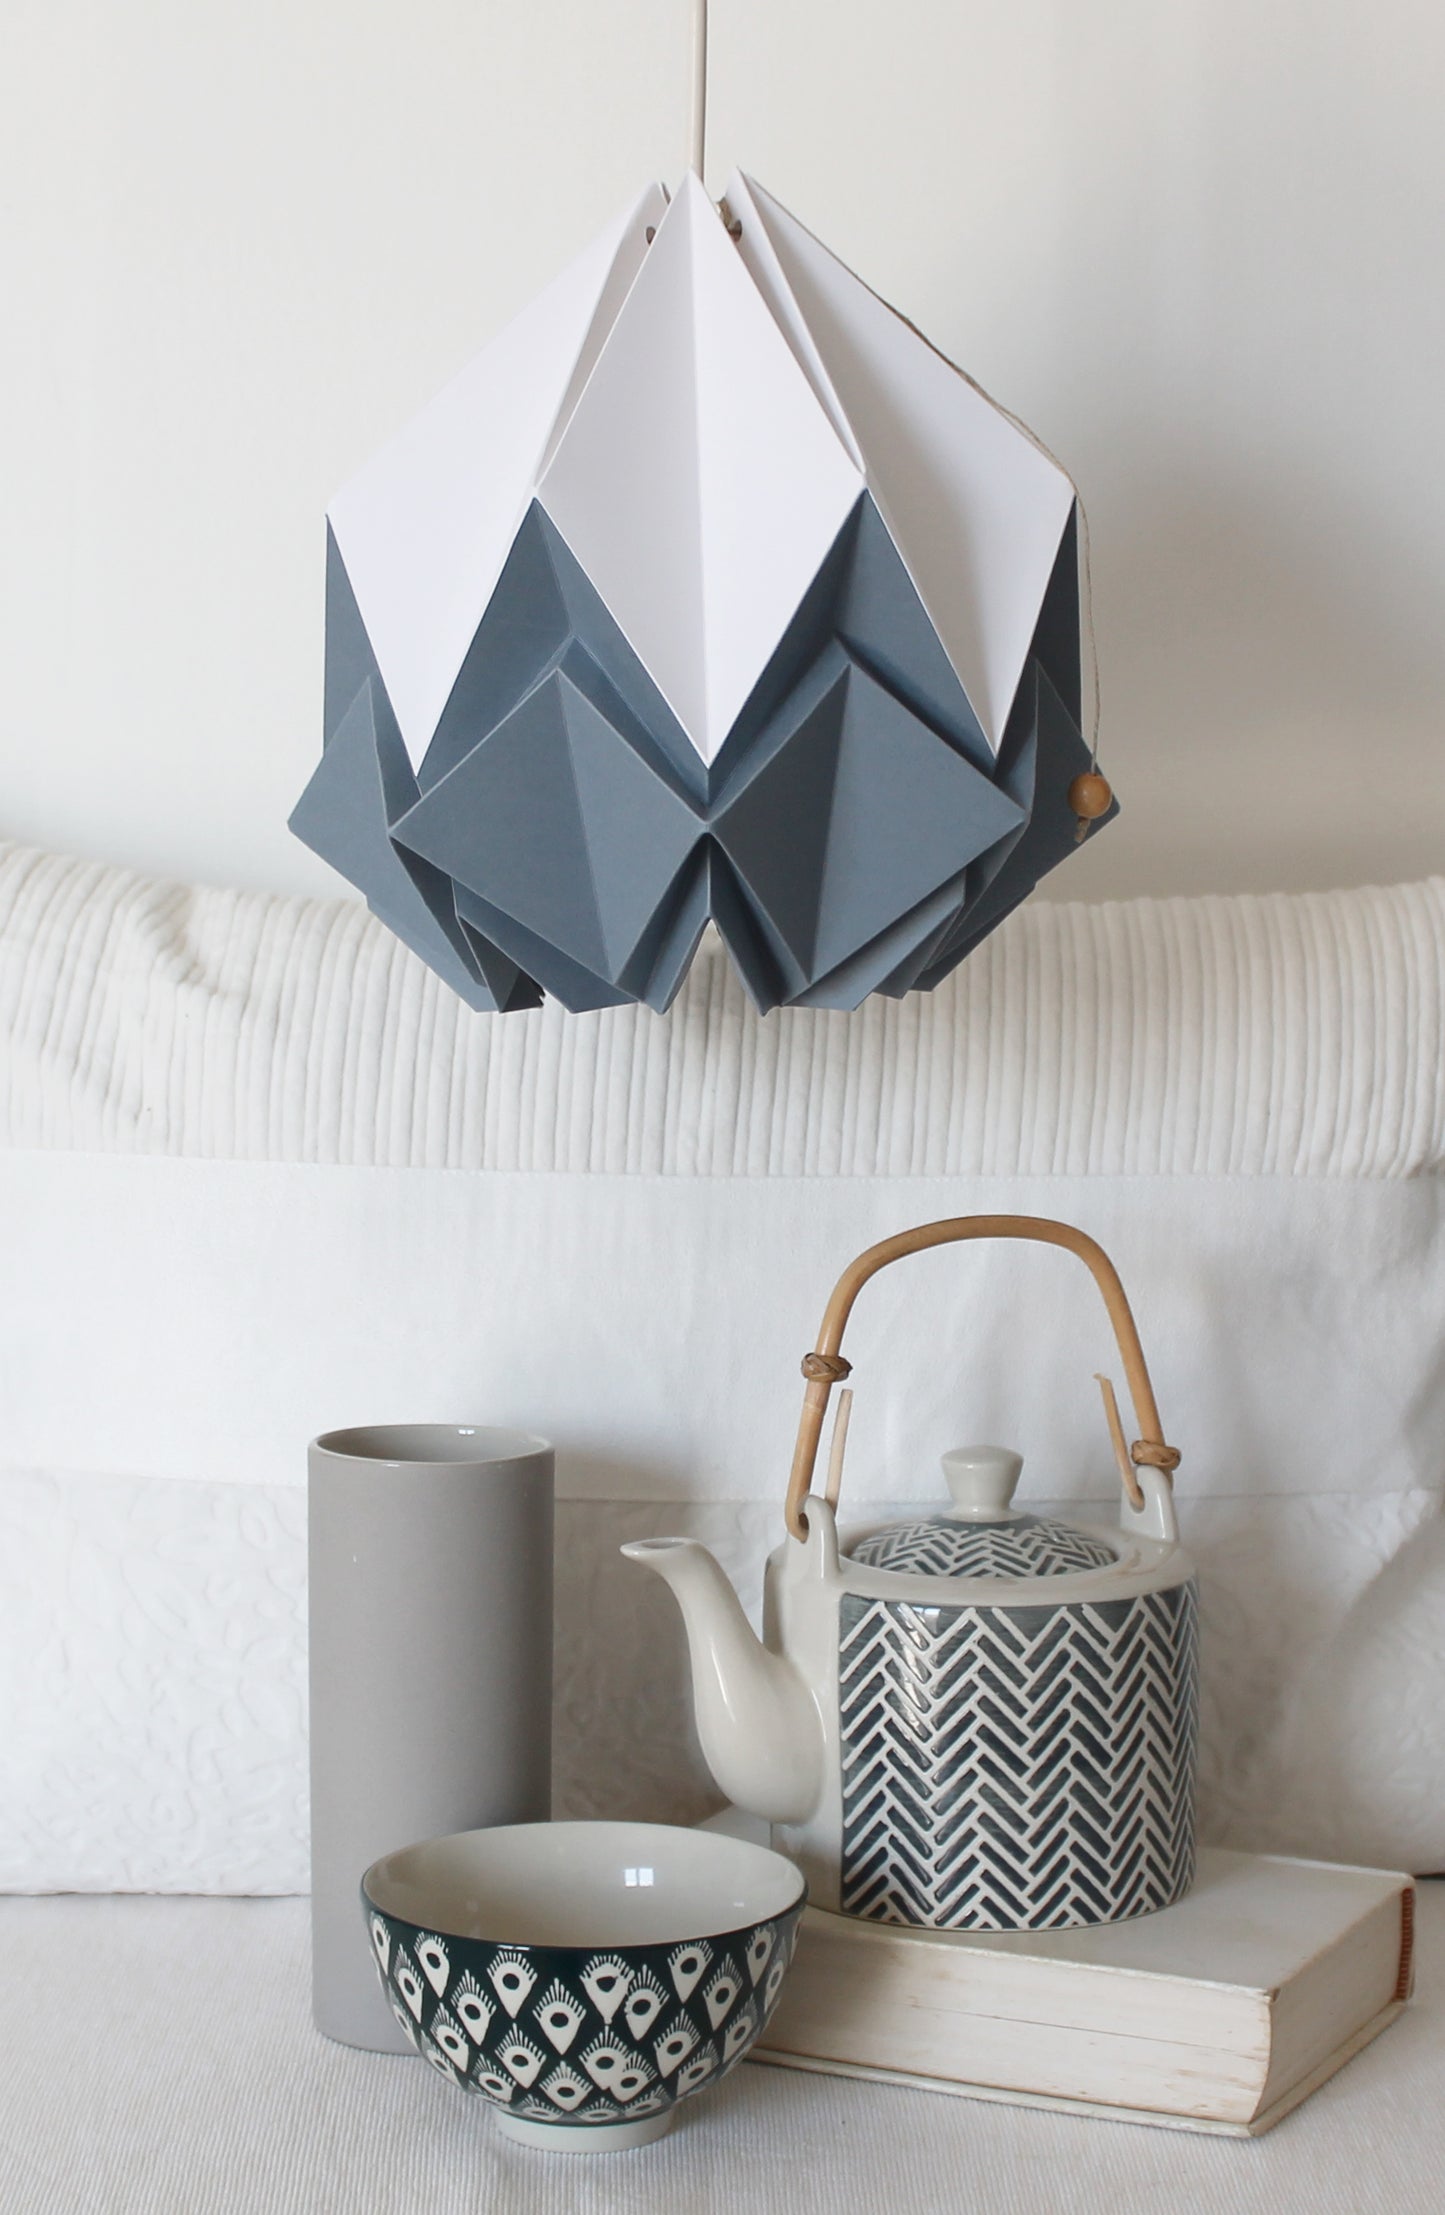 Origami Wall Lighting Fixture - Wooden Bracket With Bicolor Paper Pendant Light